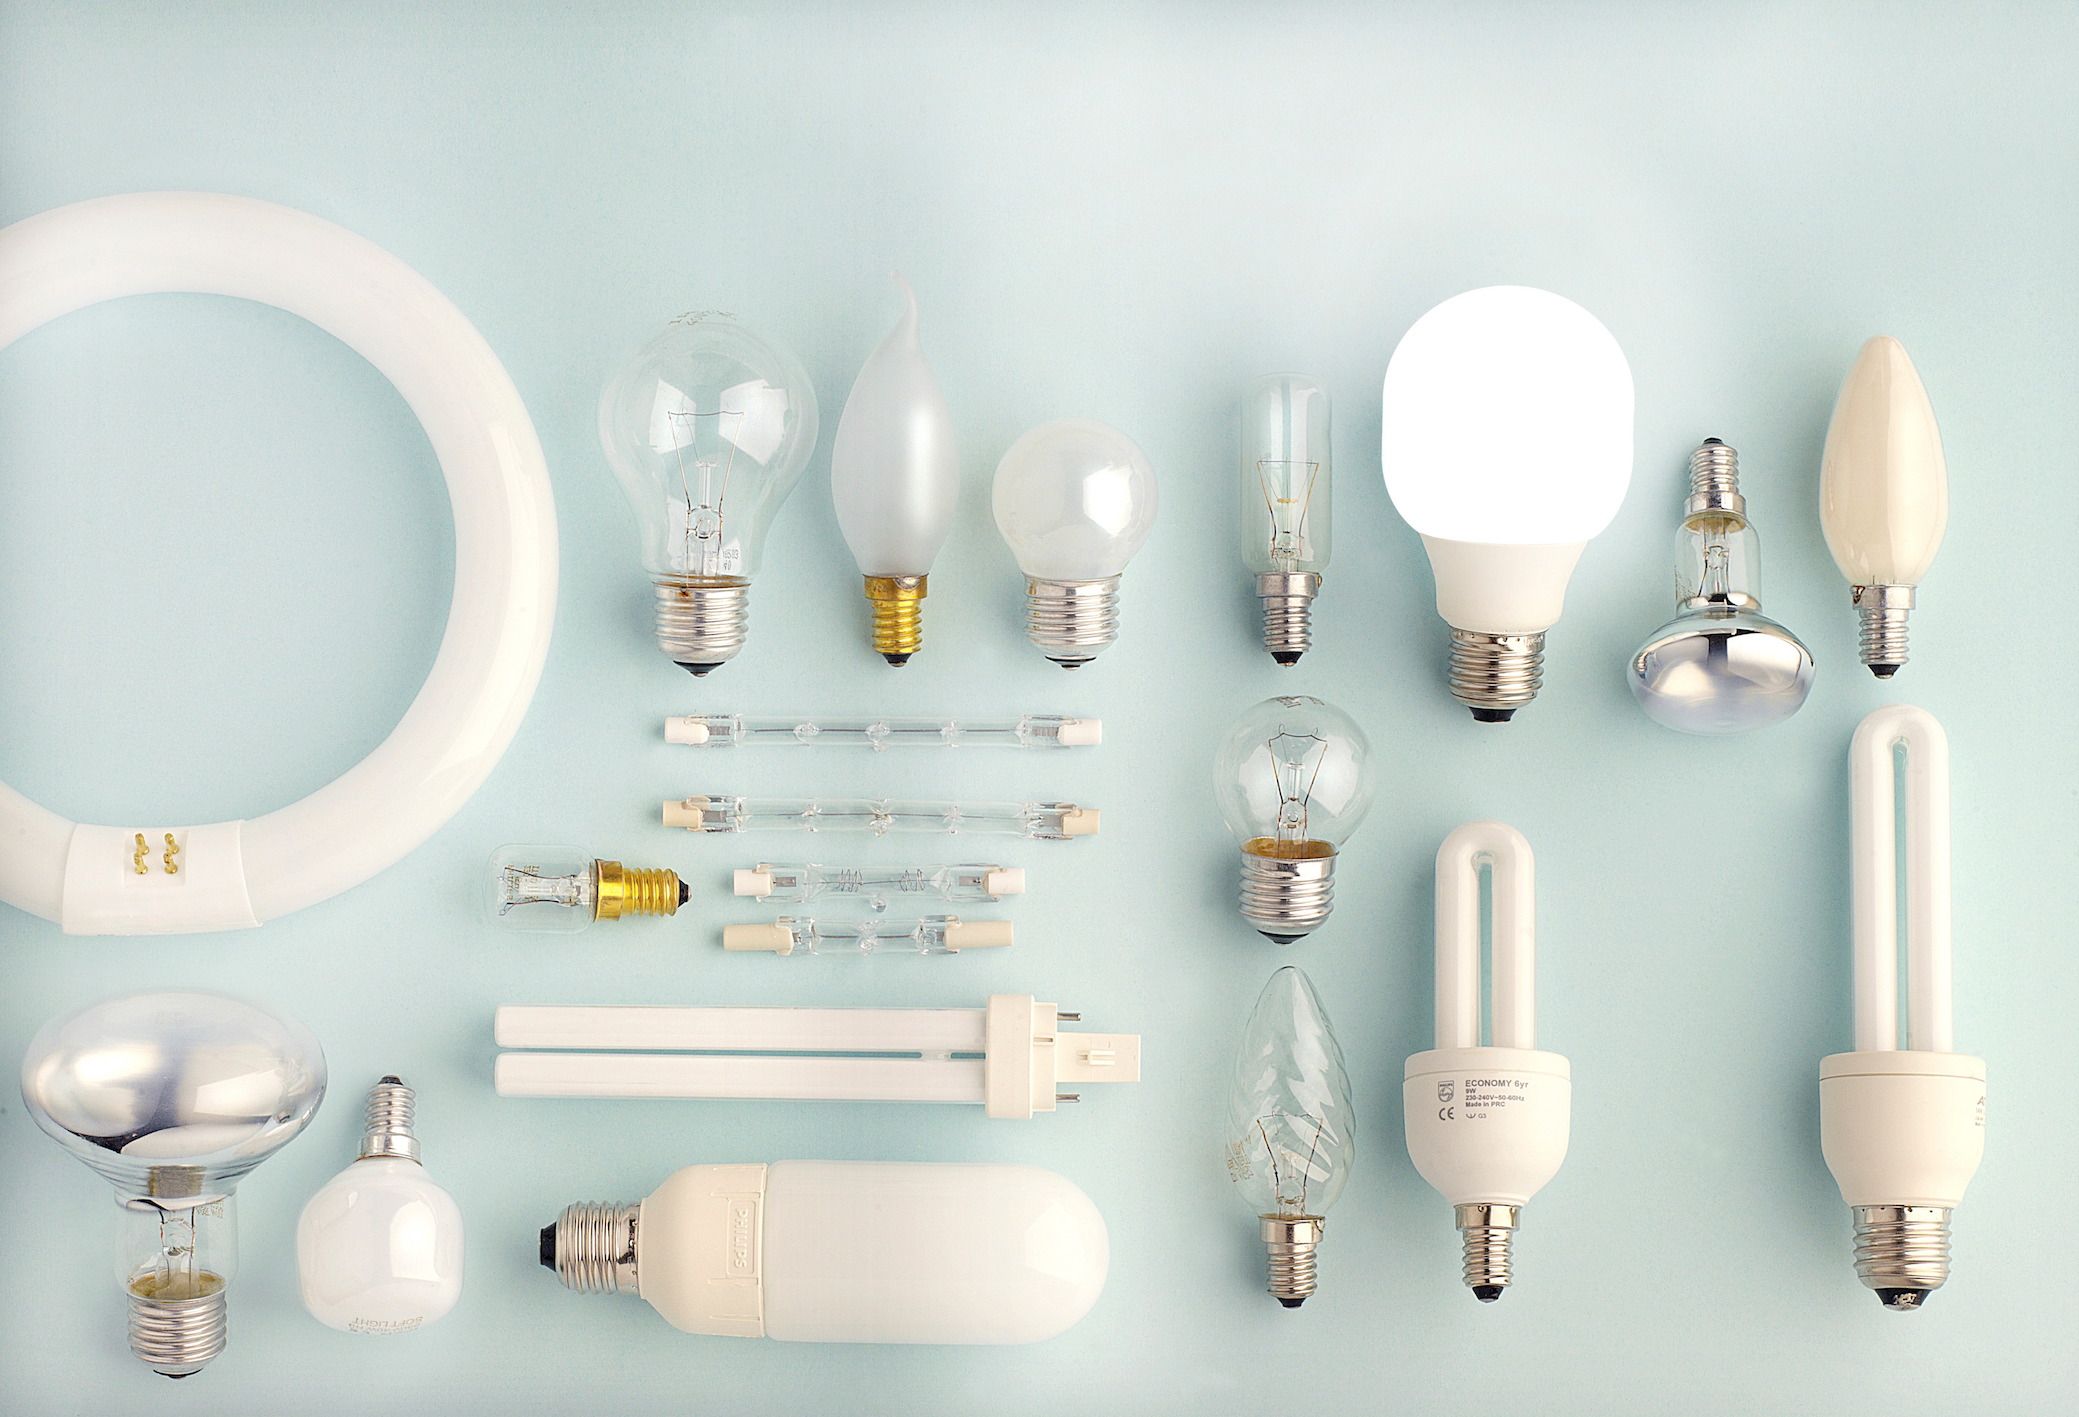 Light bulbs types